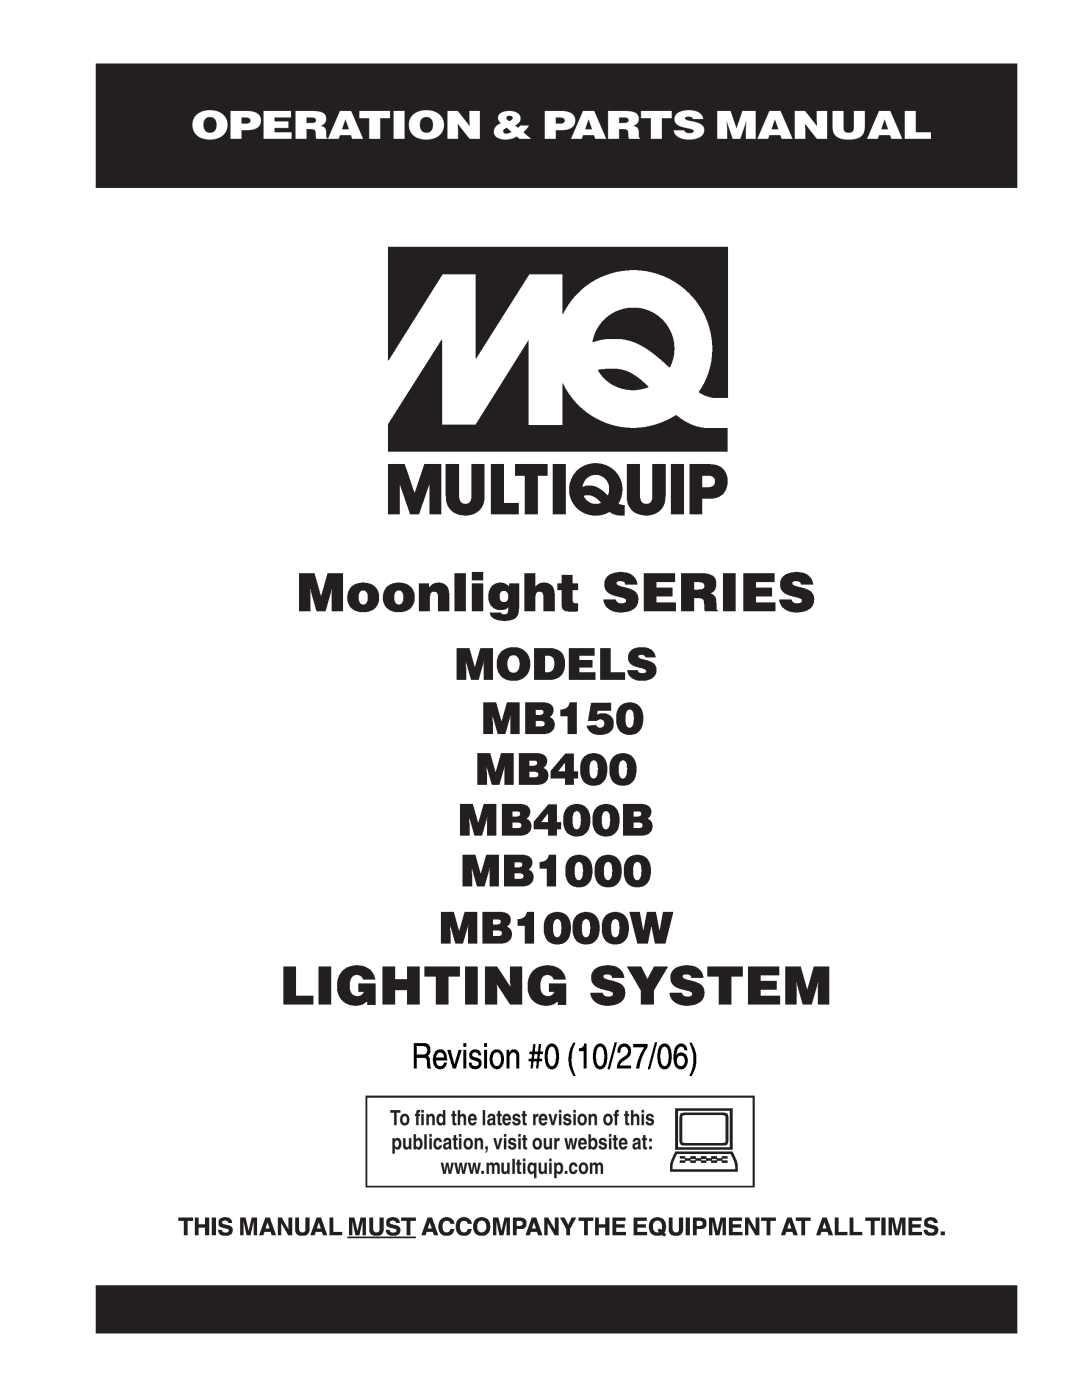 Multiquip manual MODELS MB150 MB400 MB400B MB1000 MB1000W, Operation & Parts Manual, Moonlight SERIES, Lighting System 